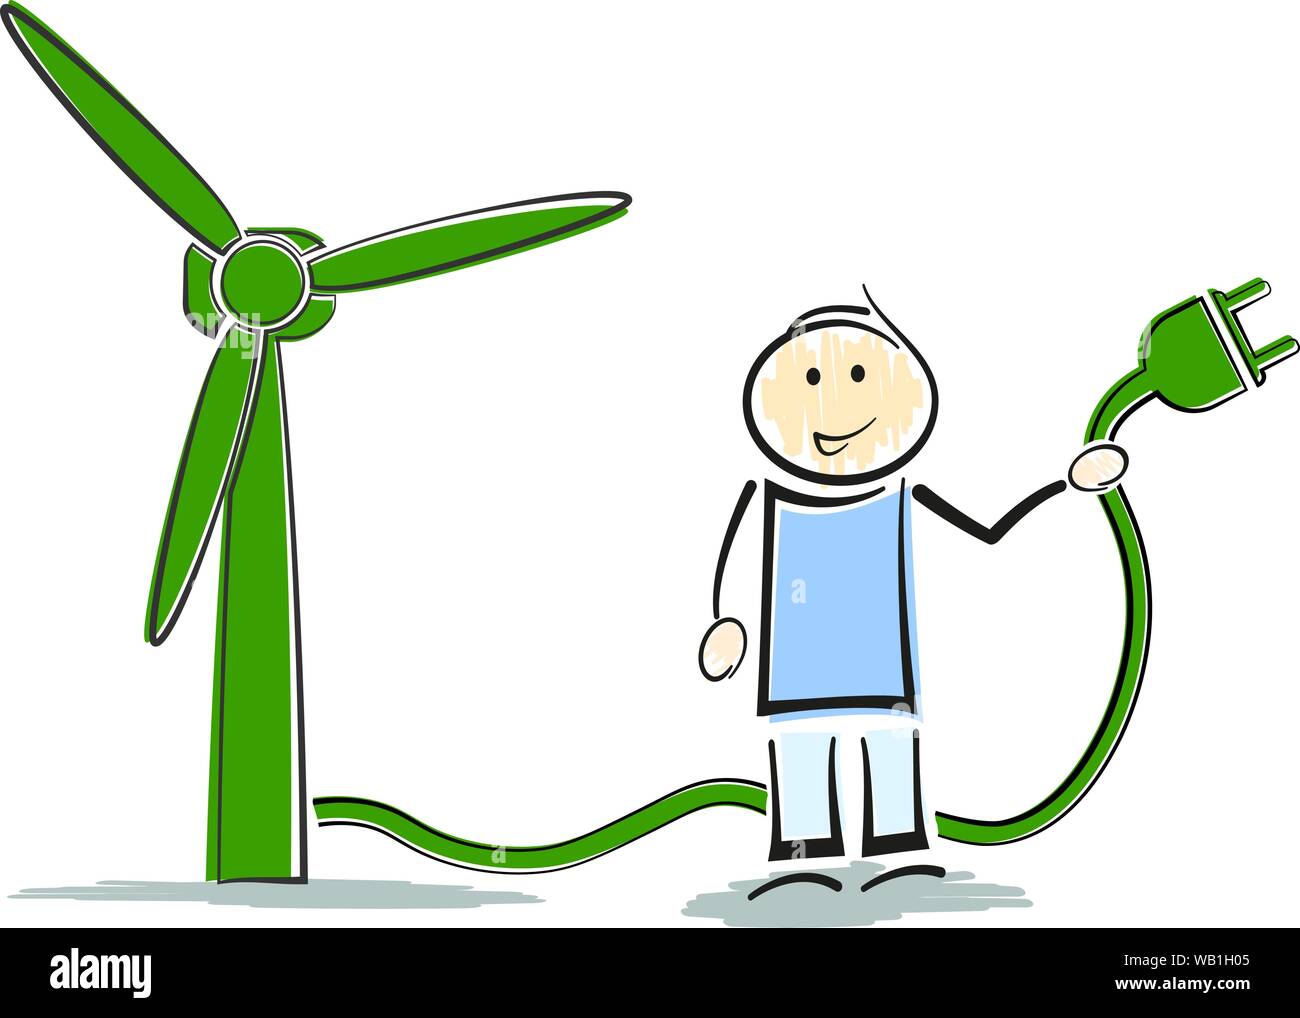 stickman character standing next to wind turbine, green renewable energy concept vector illustration Stock Vector